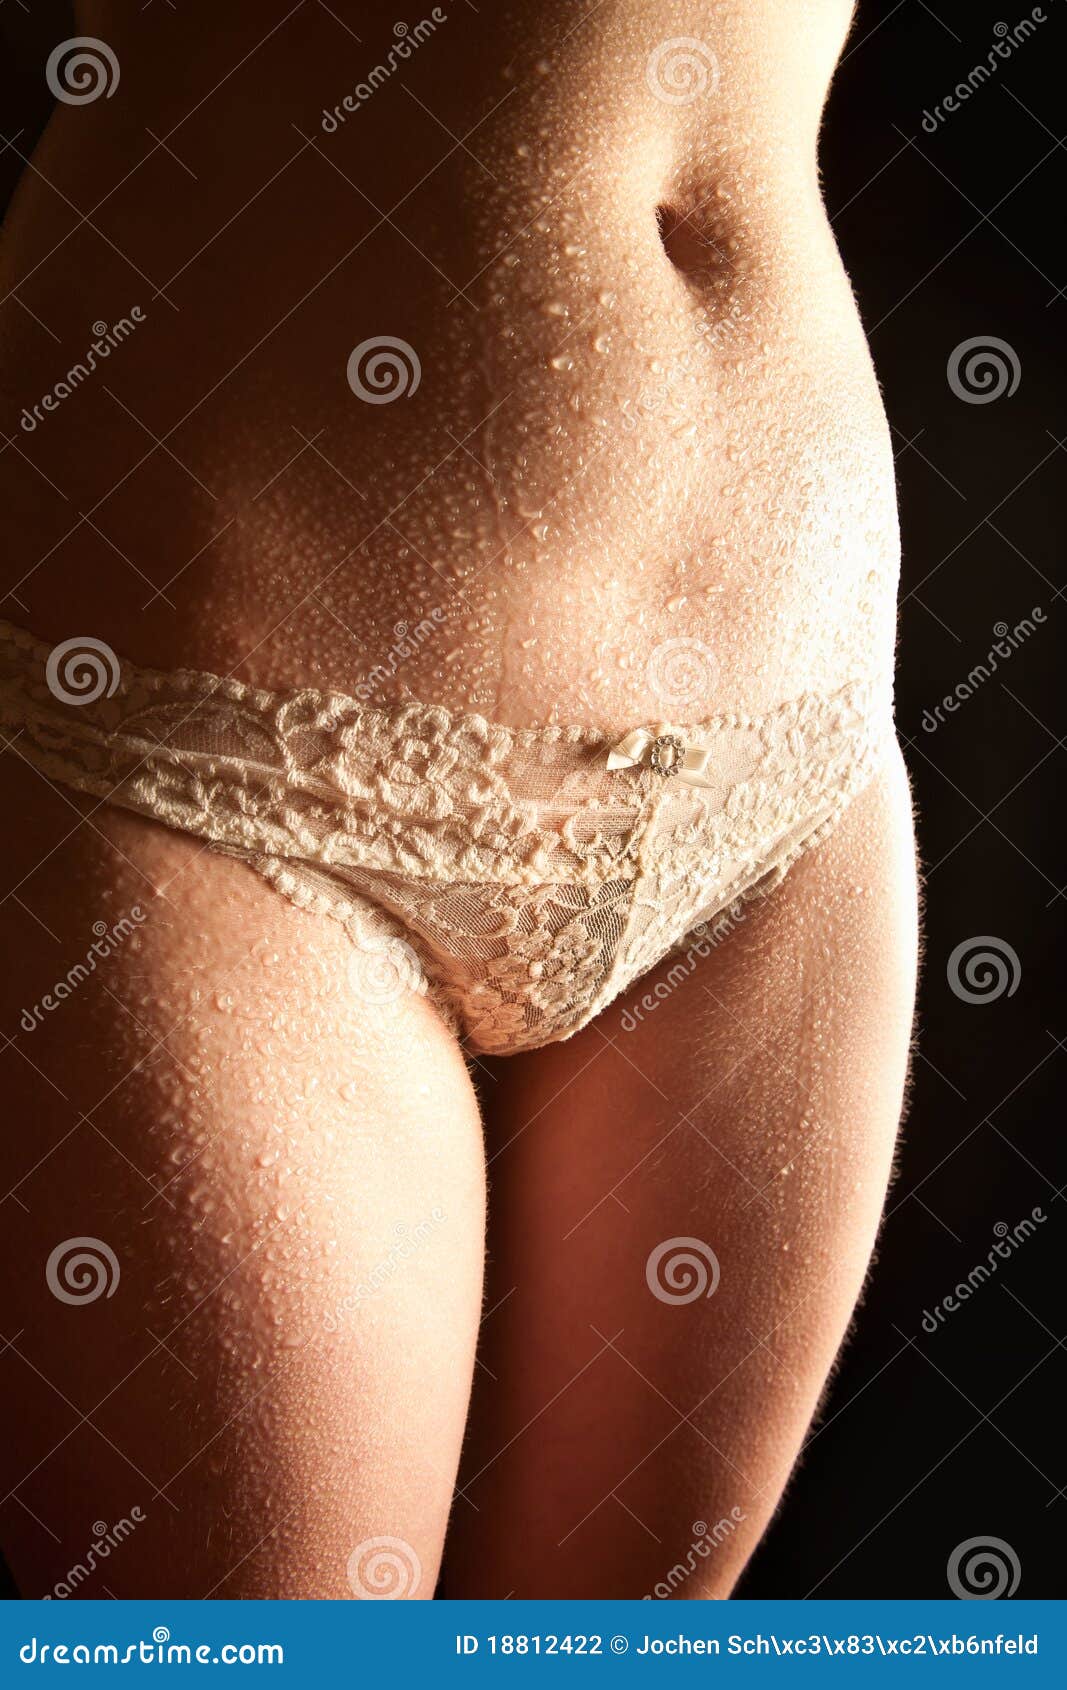 cornelius j thompson share women in wet panties photos